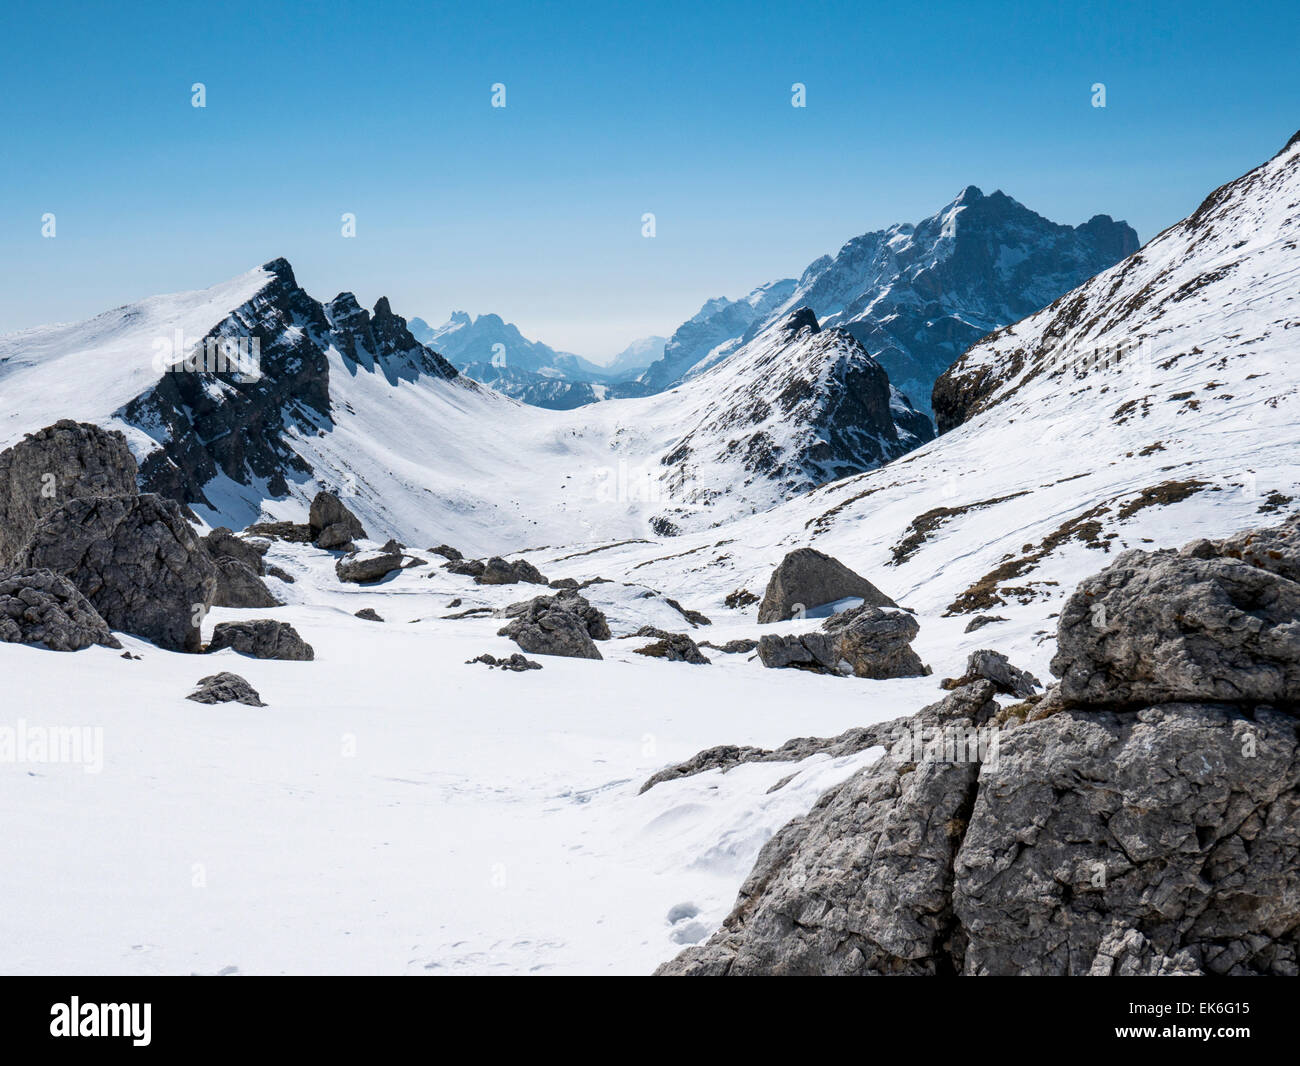 Chiara giornata invernale, Mondeval, montagne dolomitiche, Alpi, Italia Foto Stock